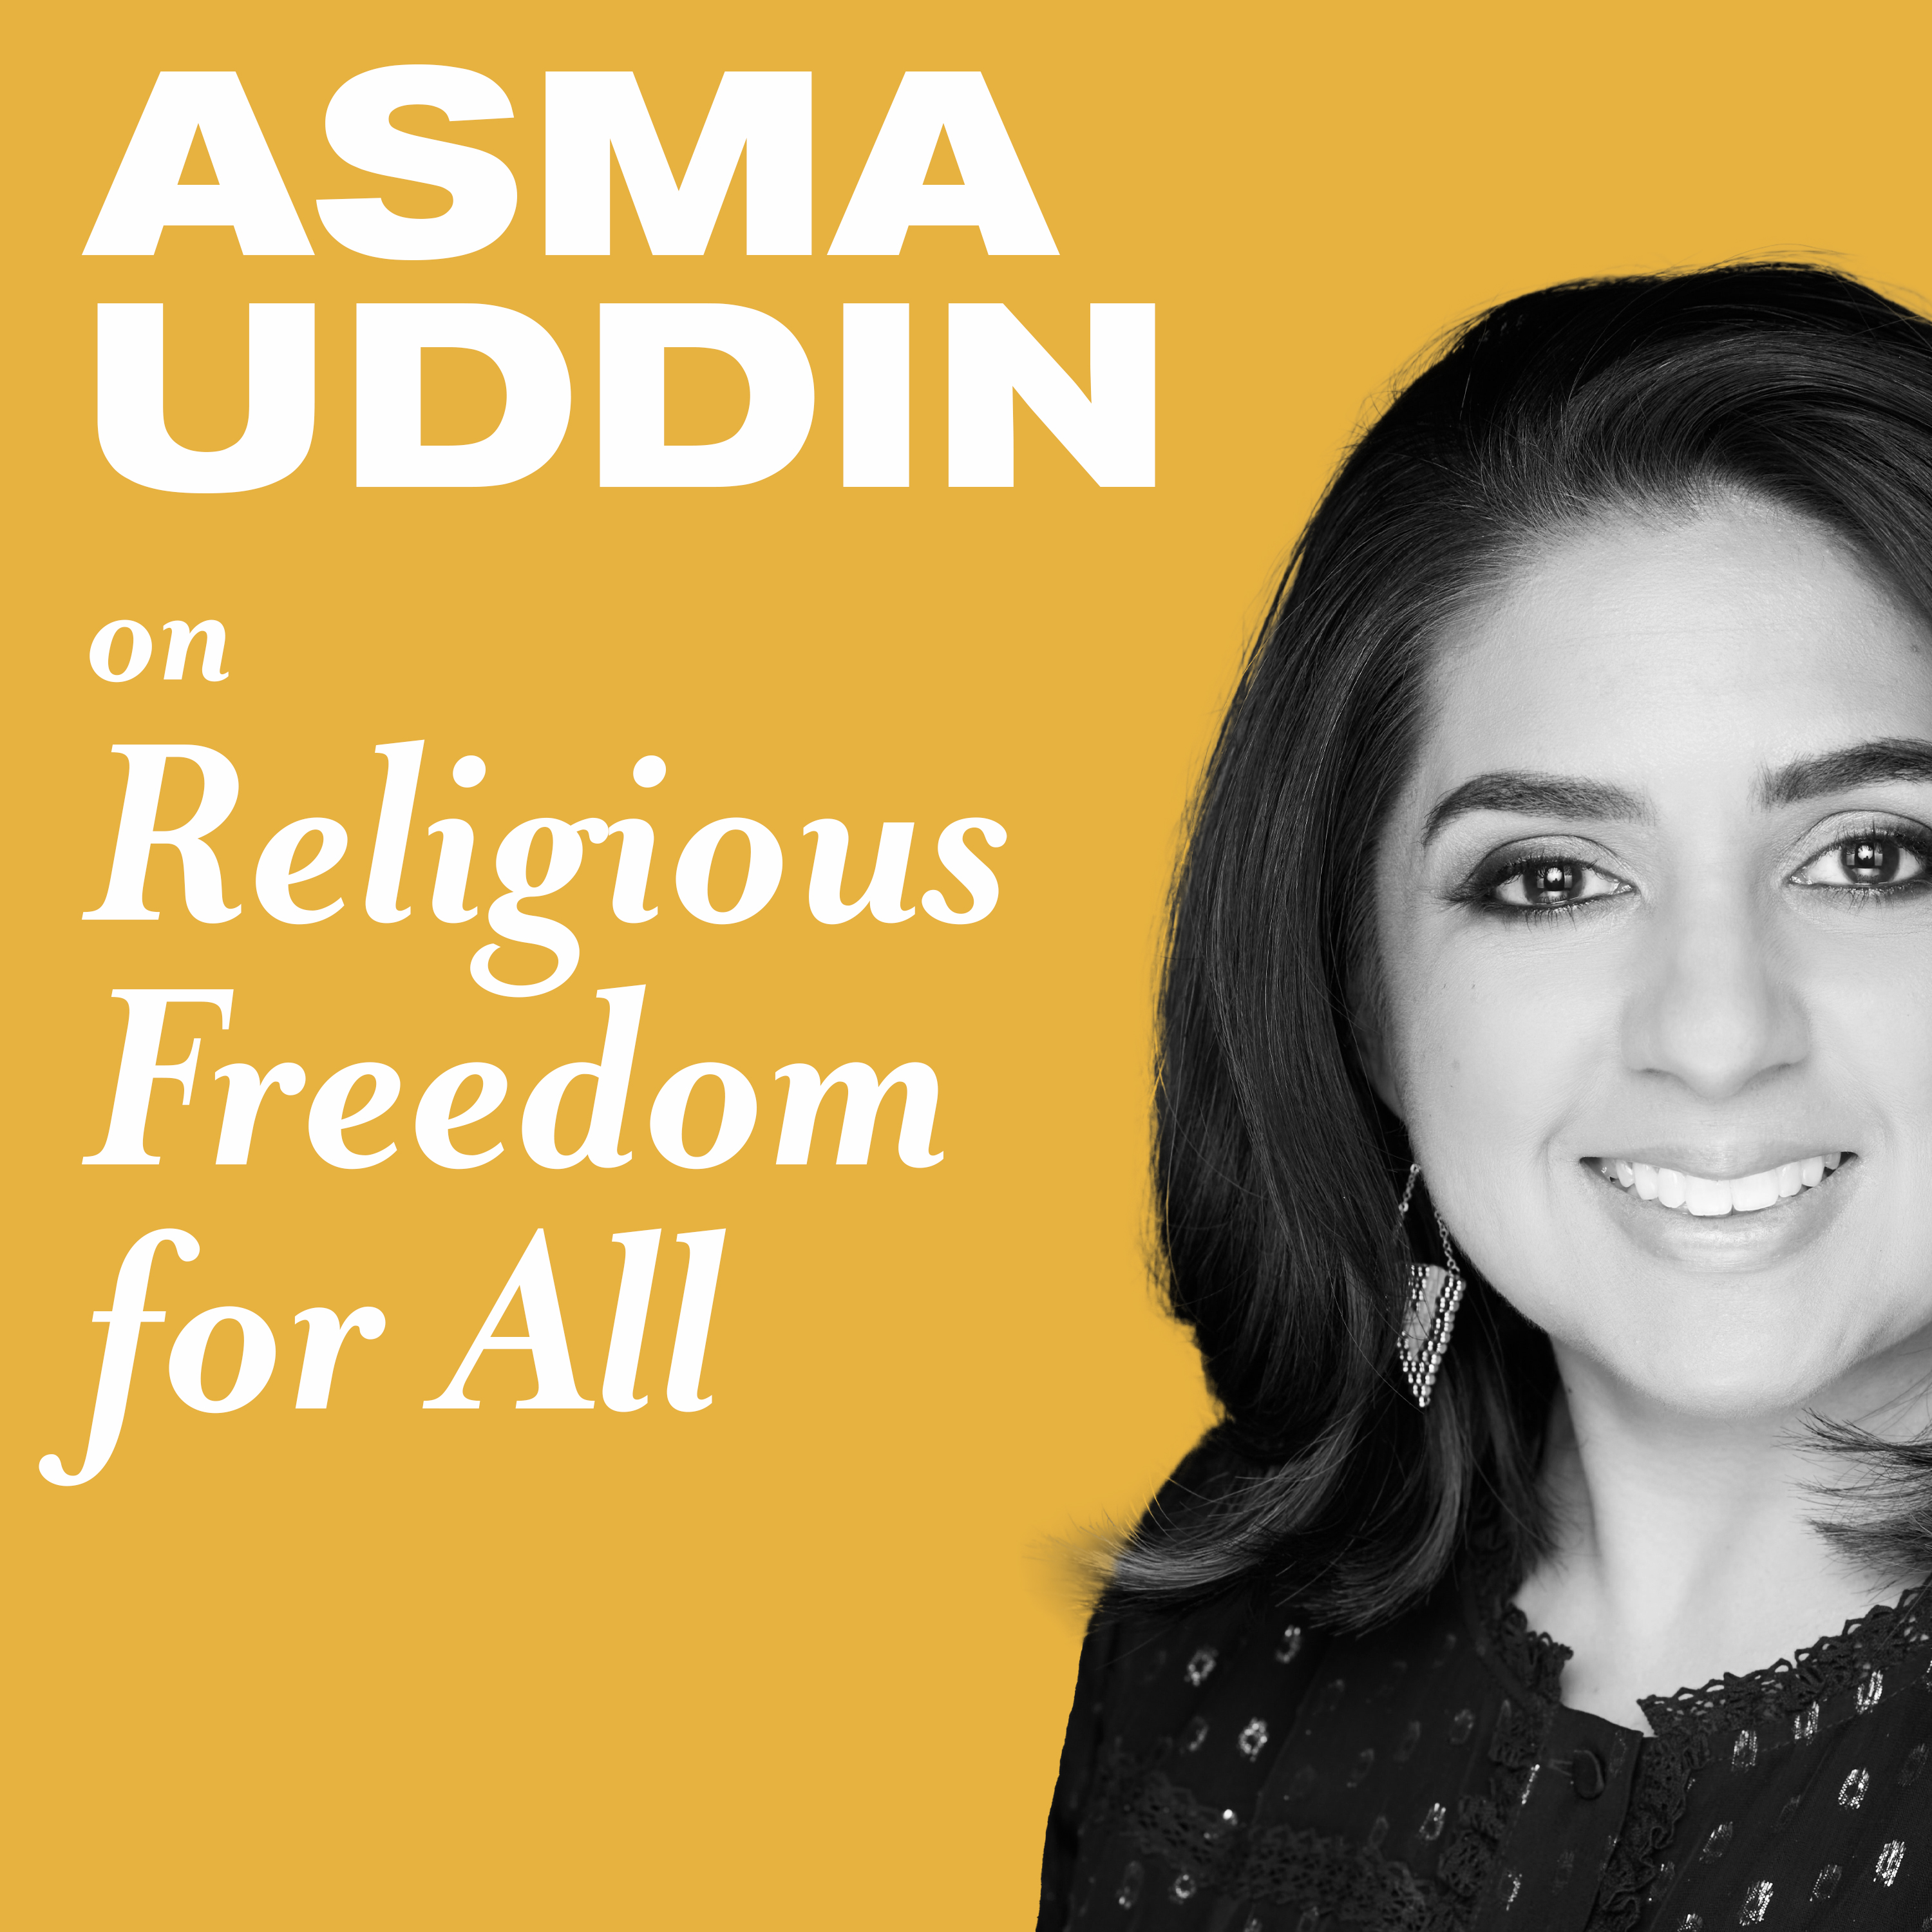 Asma Uddin on Religious Freedom for All